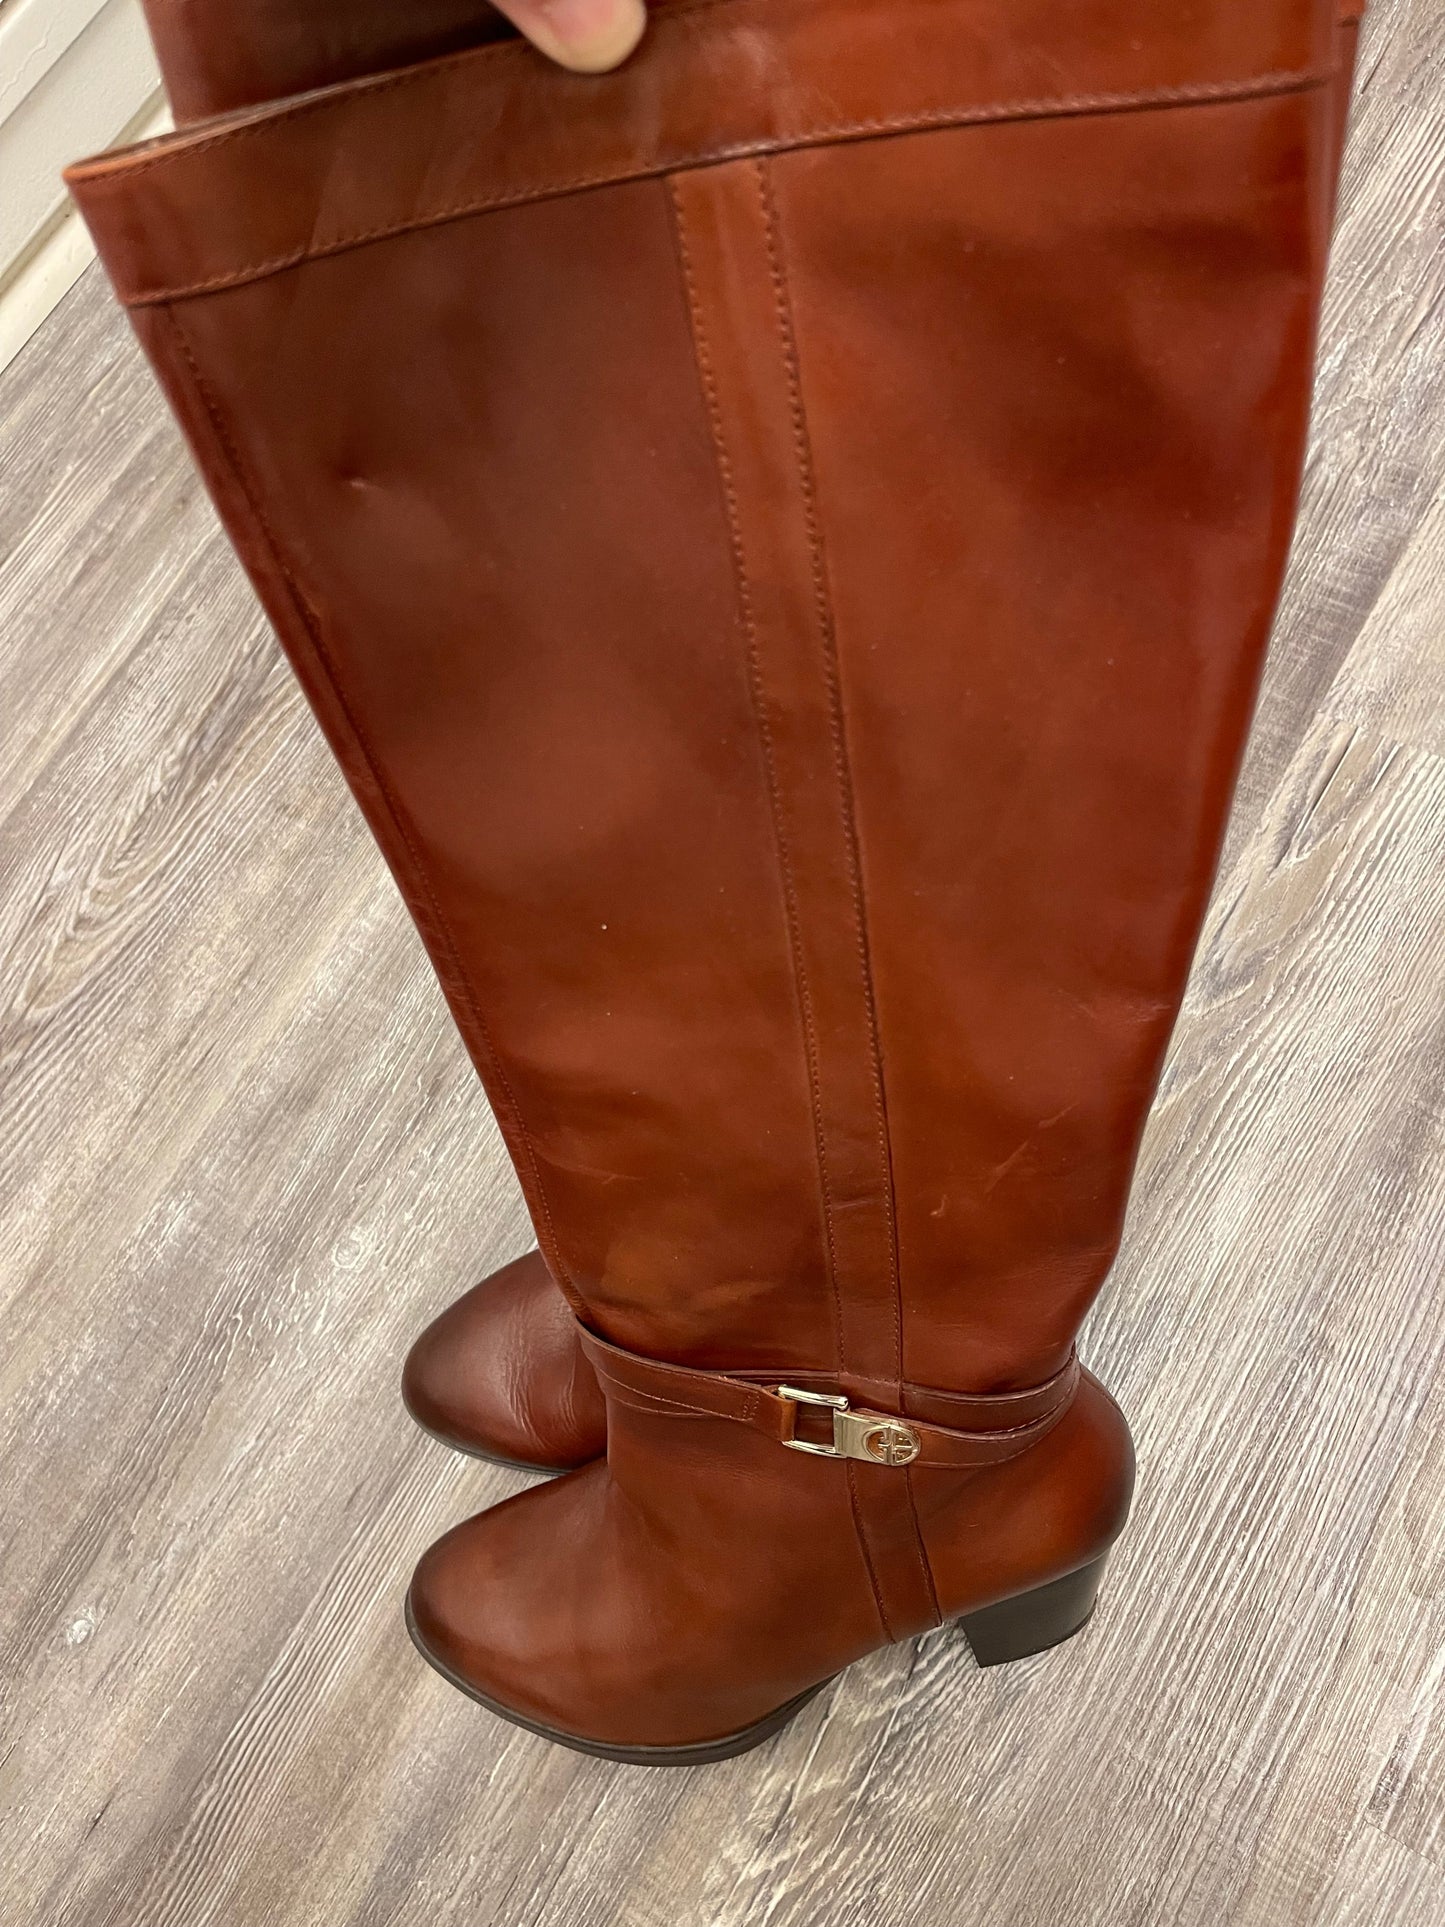 Boots Knee Heels By Giani Bernini  Size: 9.5